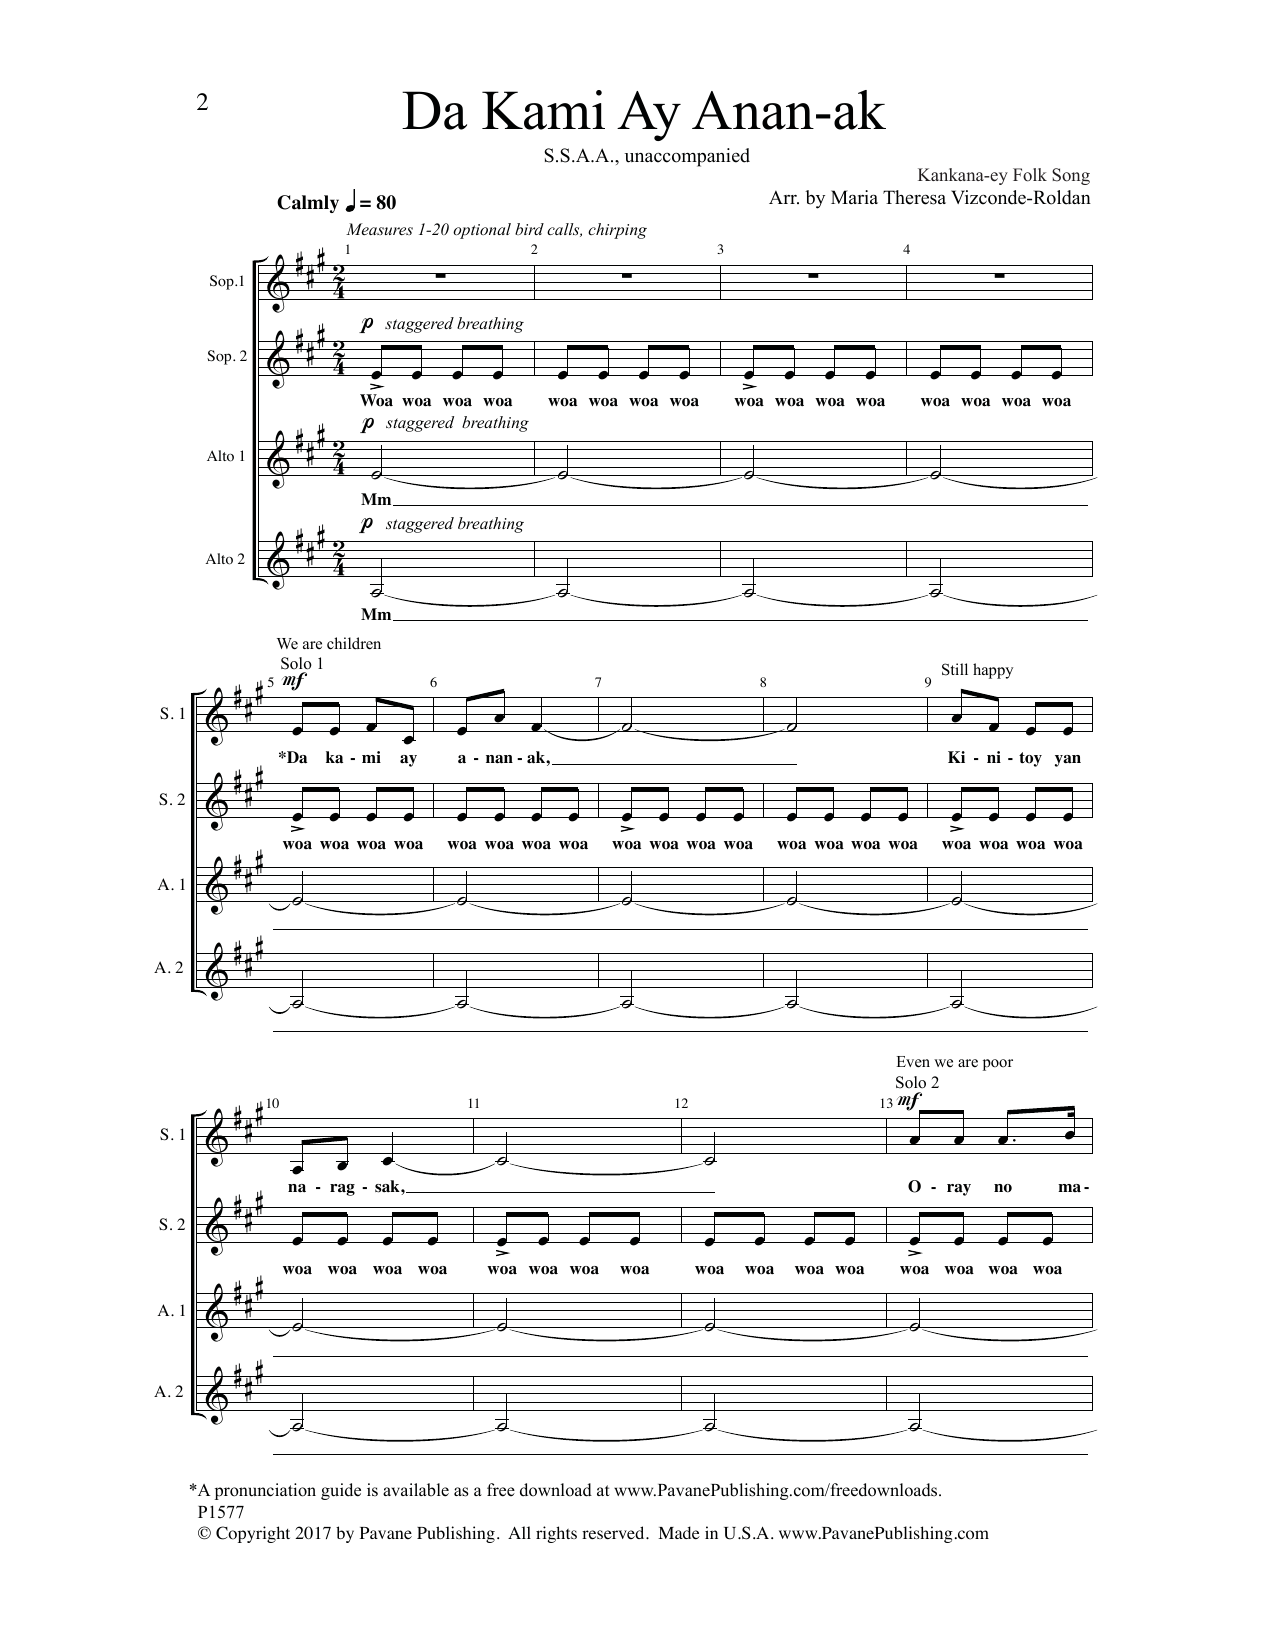 Maria Theresa Vizconde-Roldan Da Kami Ay Anan-Ak sheet music notes and chords arranged for SSA Choir